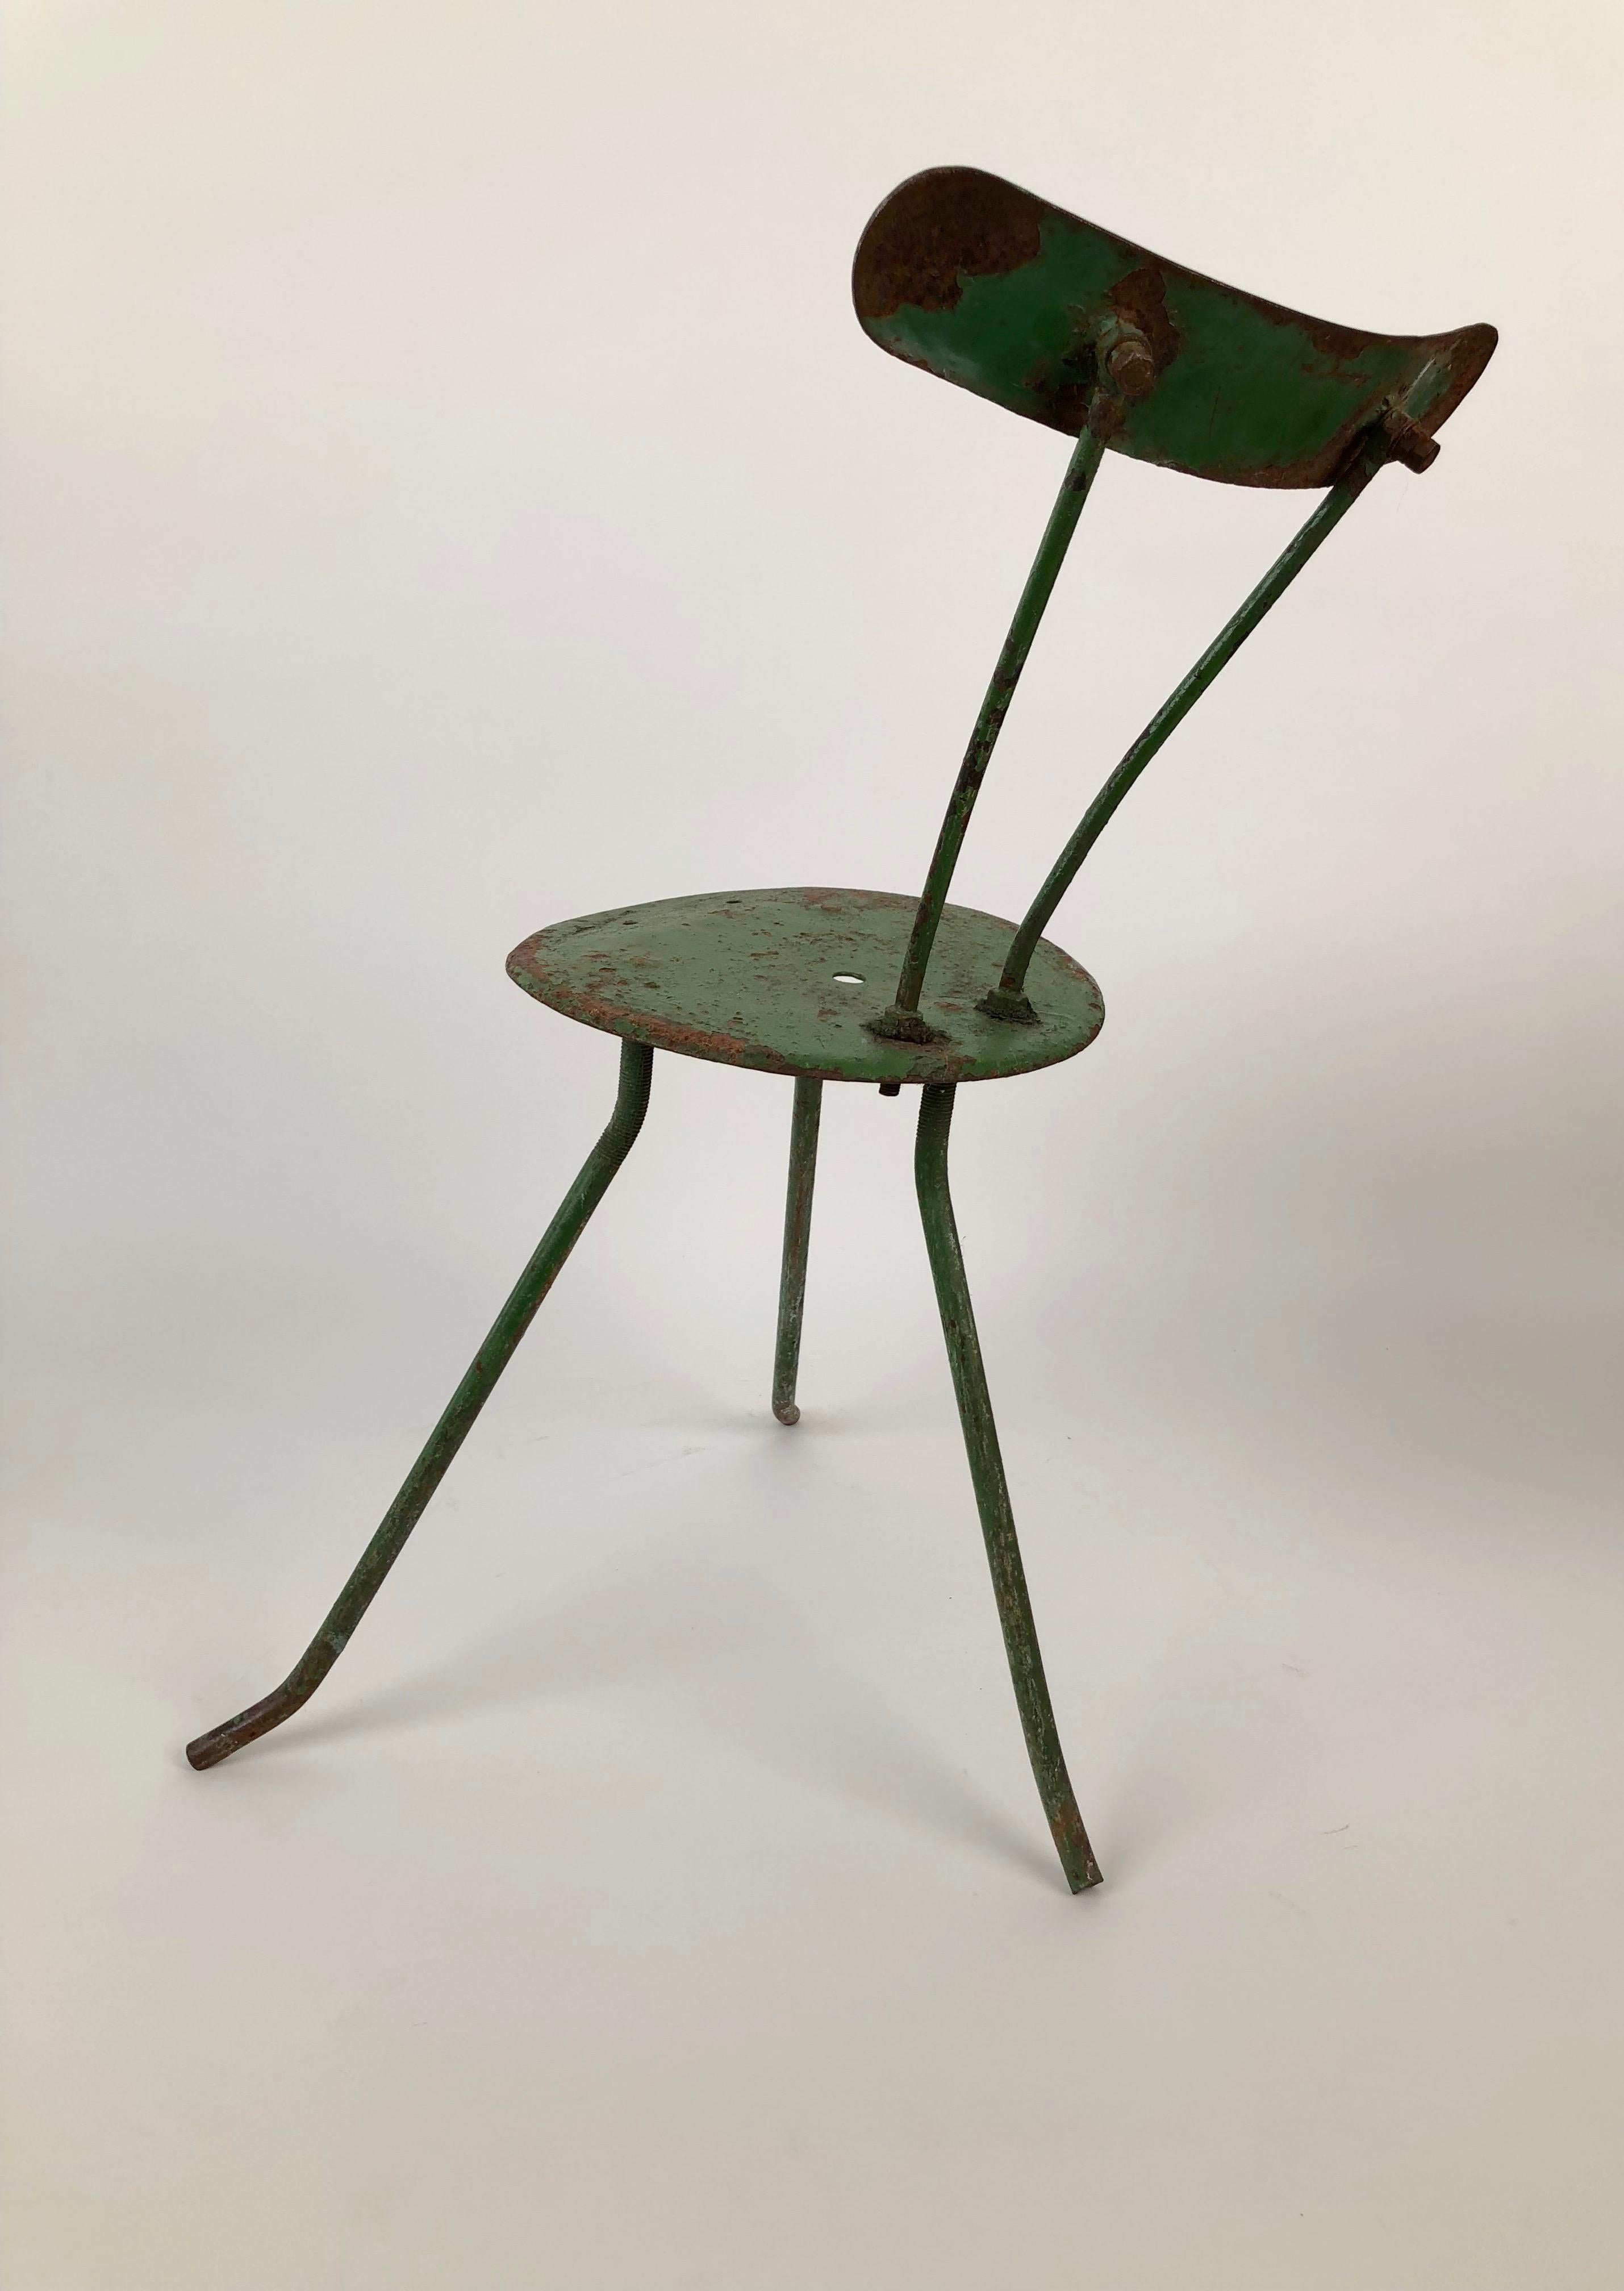 Pair of Handmade Metal Chairs, 1950s, from the Balaton Lake Region, Hungary For Sale 4